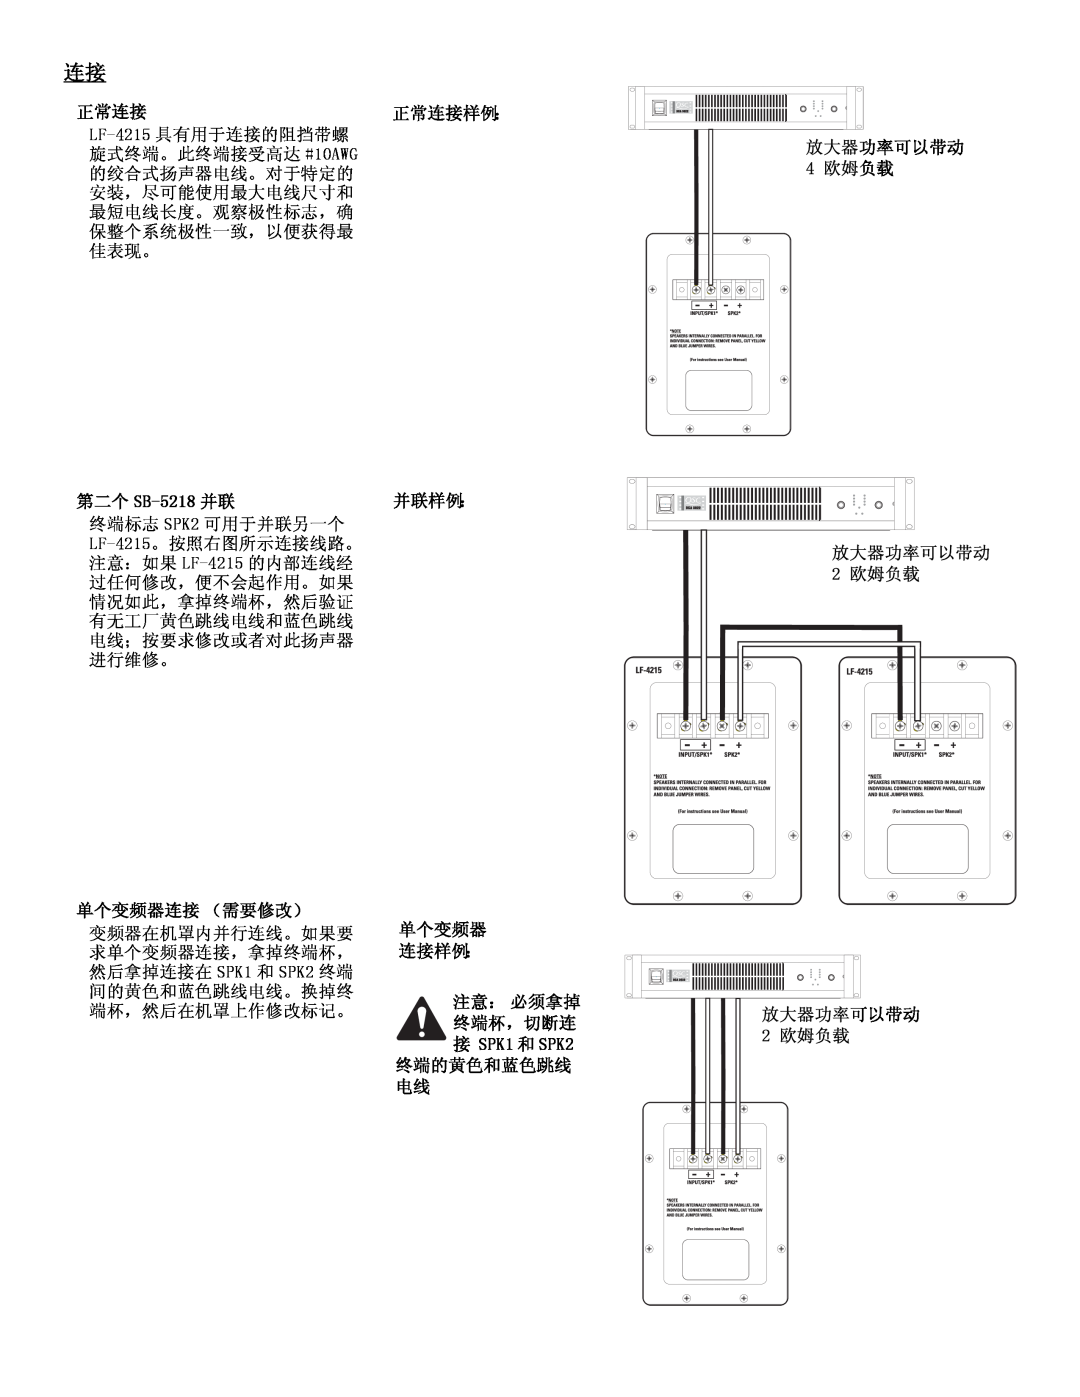 Polaroid LF-4215 第二个 SB-5218并联, 正常连接样例： 放大器功率可以带动 4 欧姆负载 并联样例： 放大器功率可以带动 2 欧姆负载, 单个变频器连接 （需要修改）, 单个变频器 连接样例： 